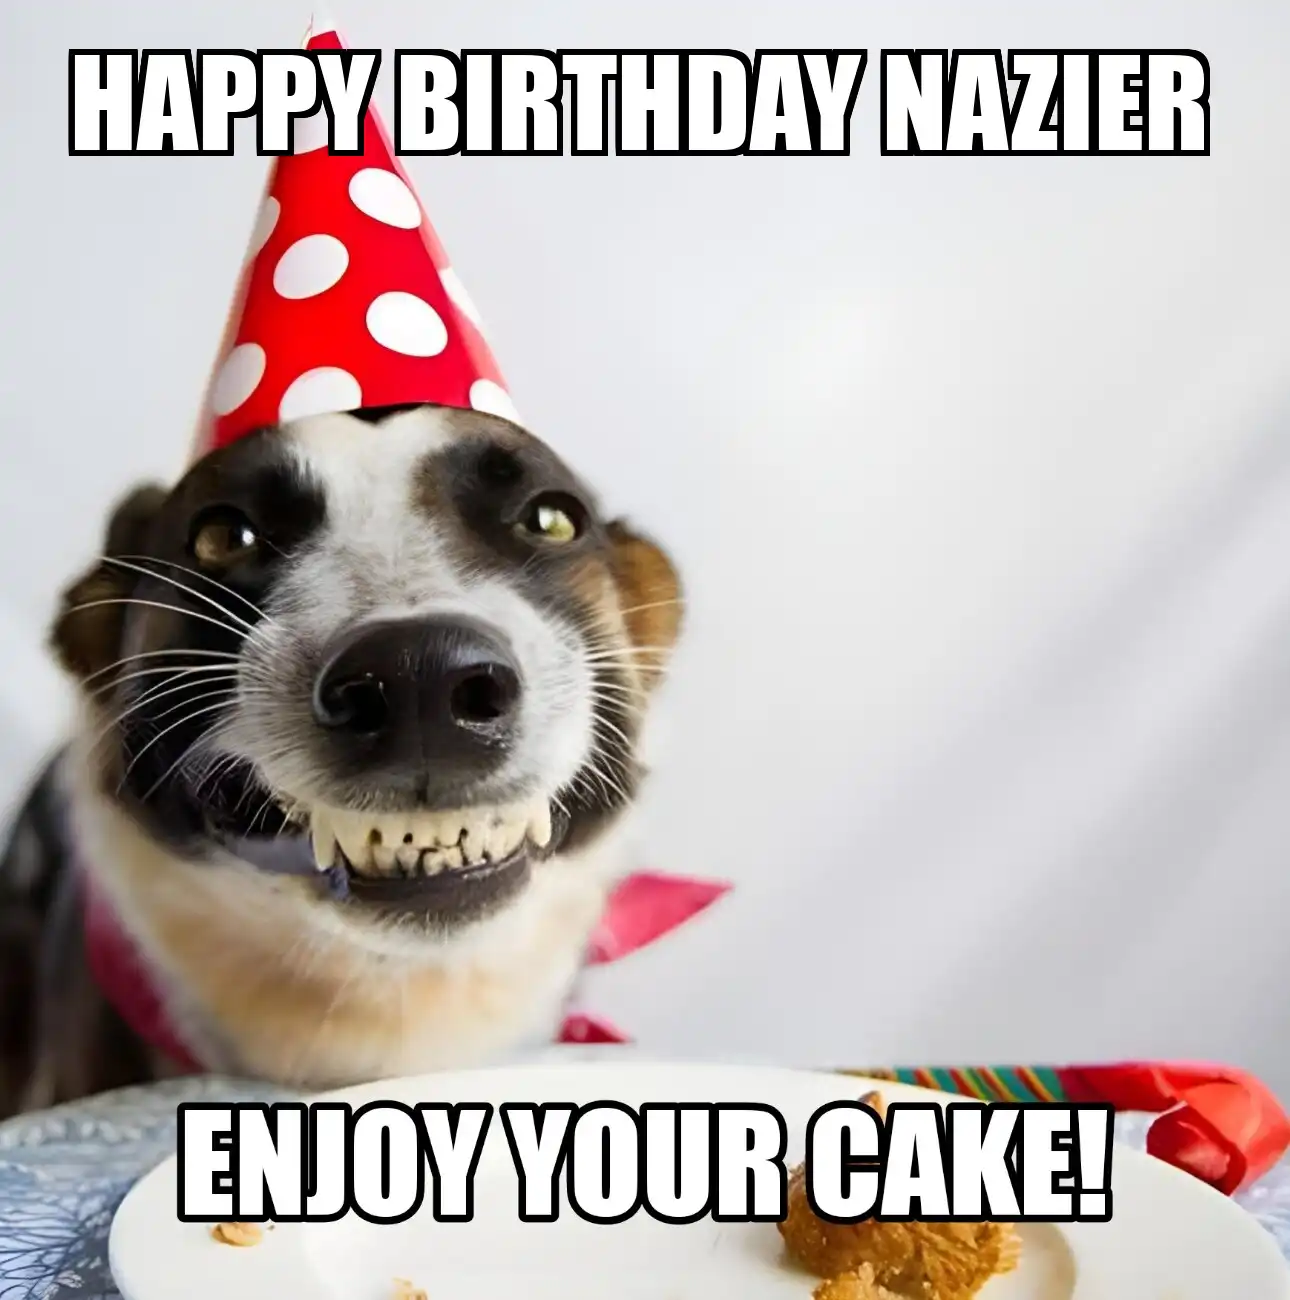 Happy Birthday Nazier Enjoy Your Cake Dog Meme